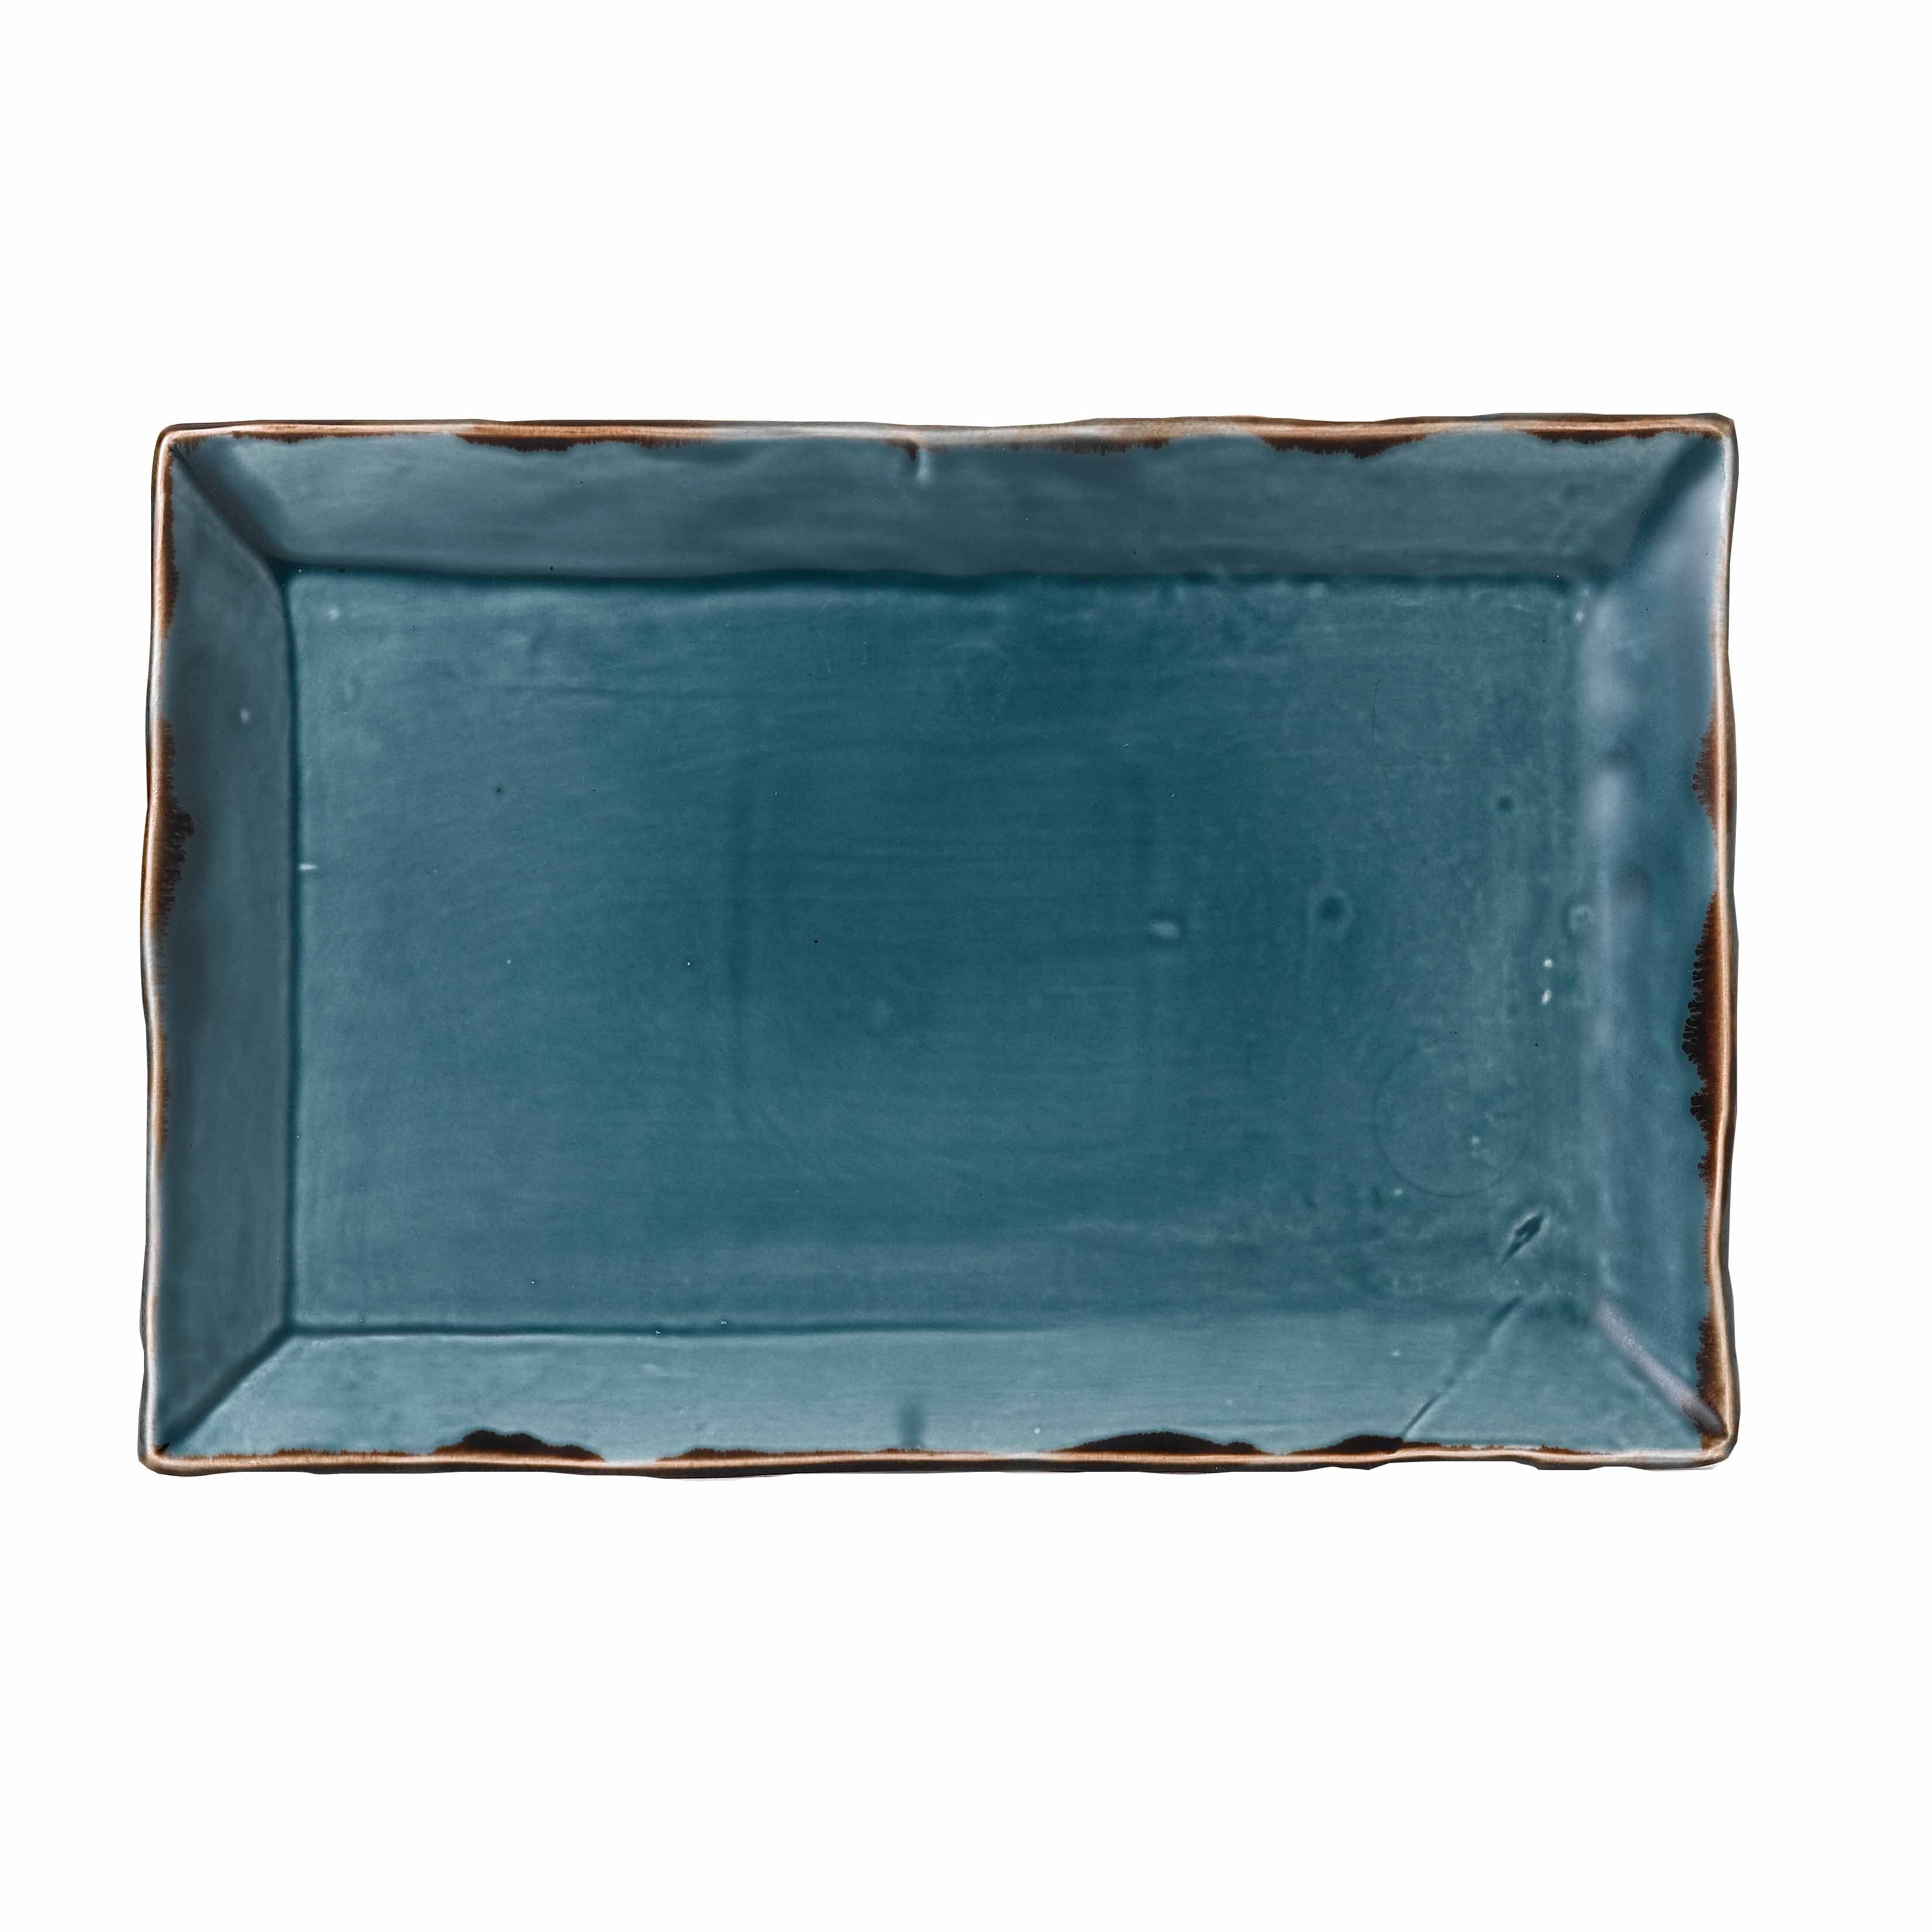 Dudson Servierbrett Dudson Harvest Blau Tablett Rechteckig 34.5x23.3cm 6 Stück, Feinstes Porzellan